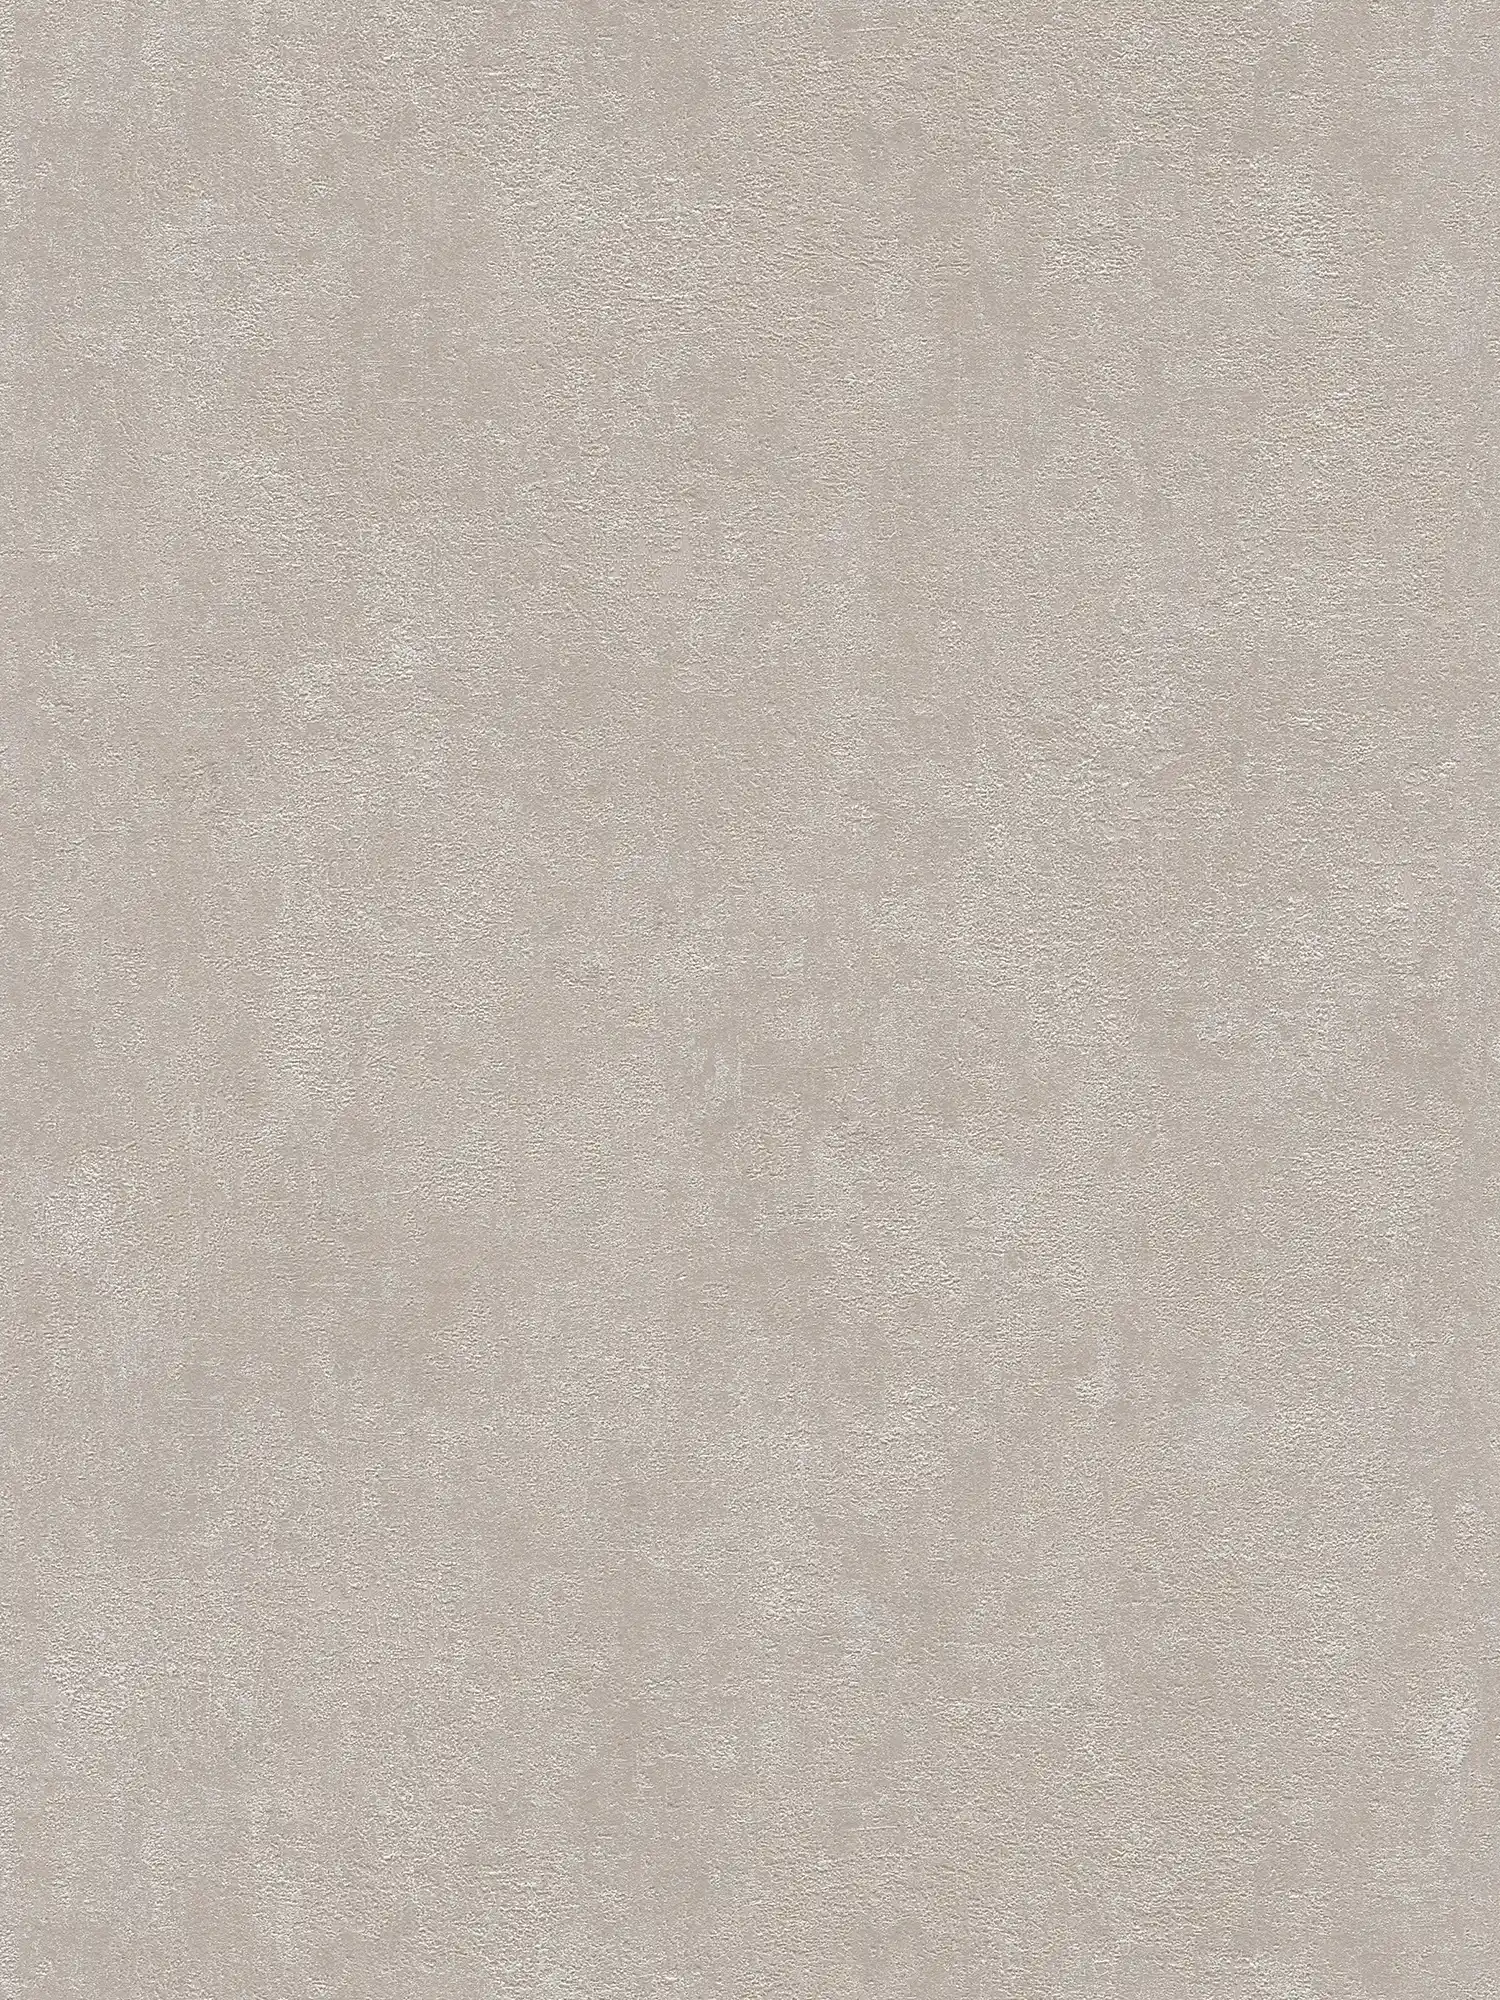 Non-woven wallpaper grey satin texture design in stone look
